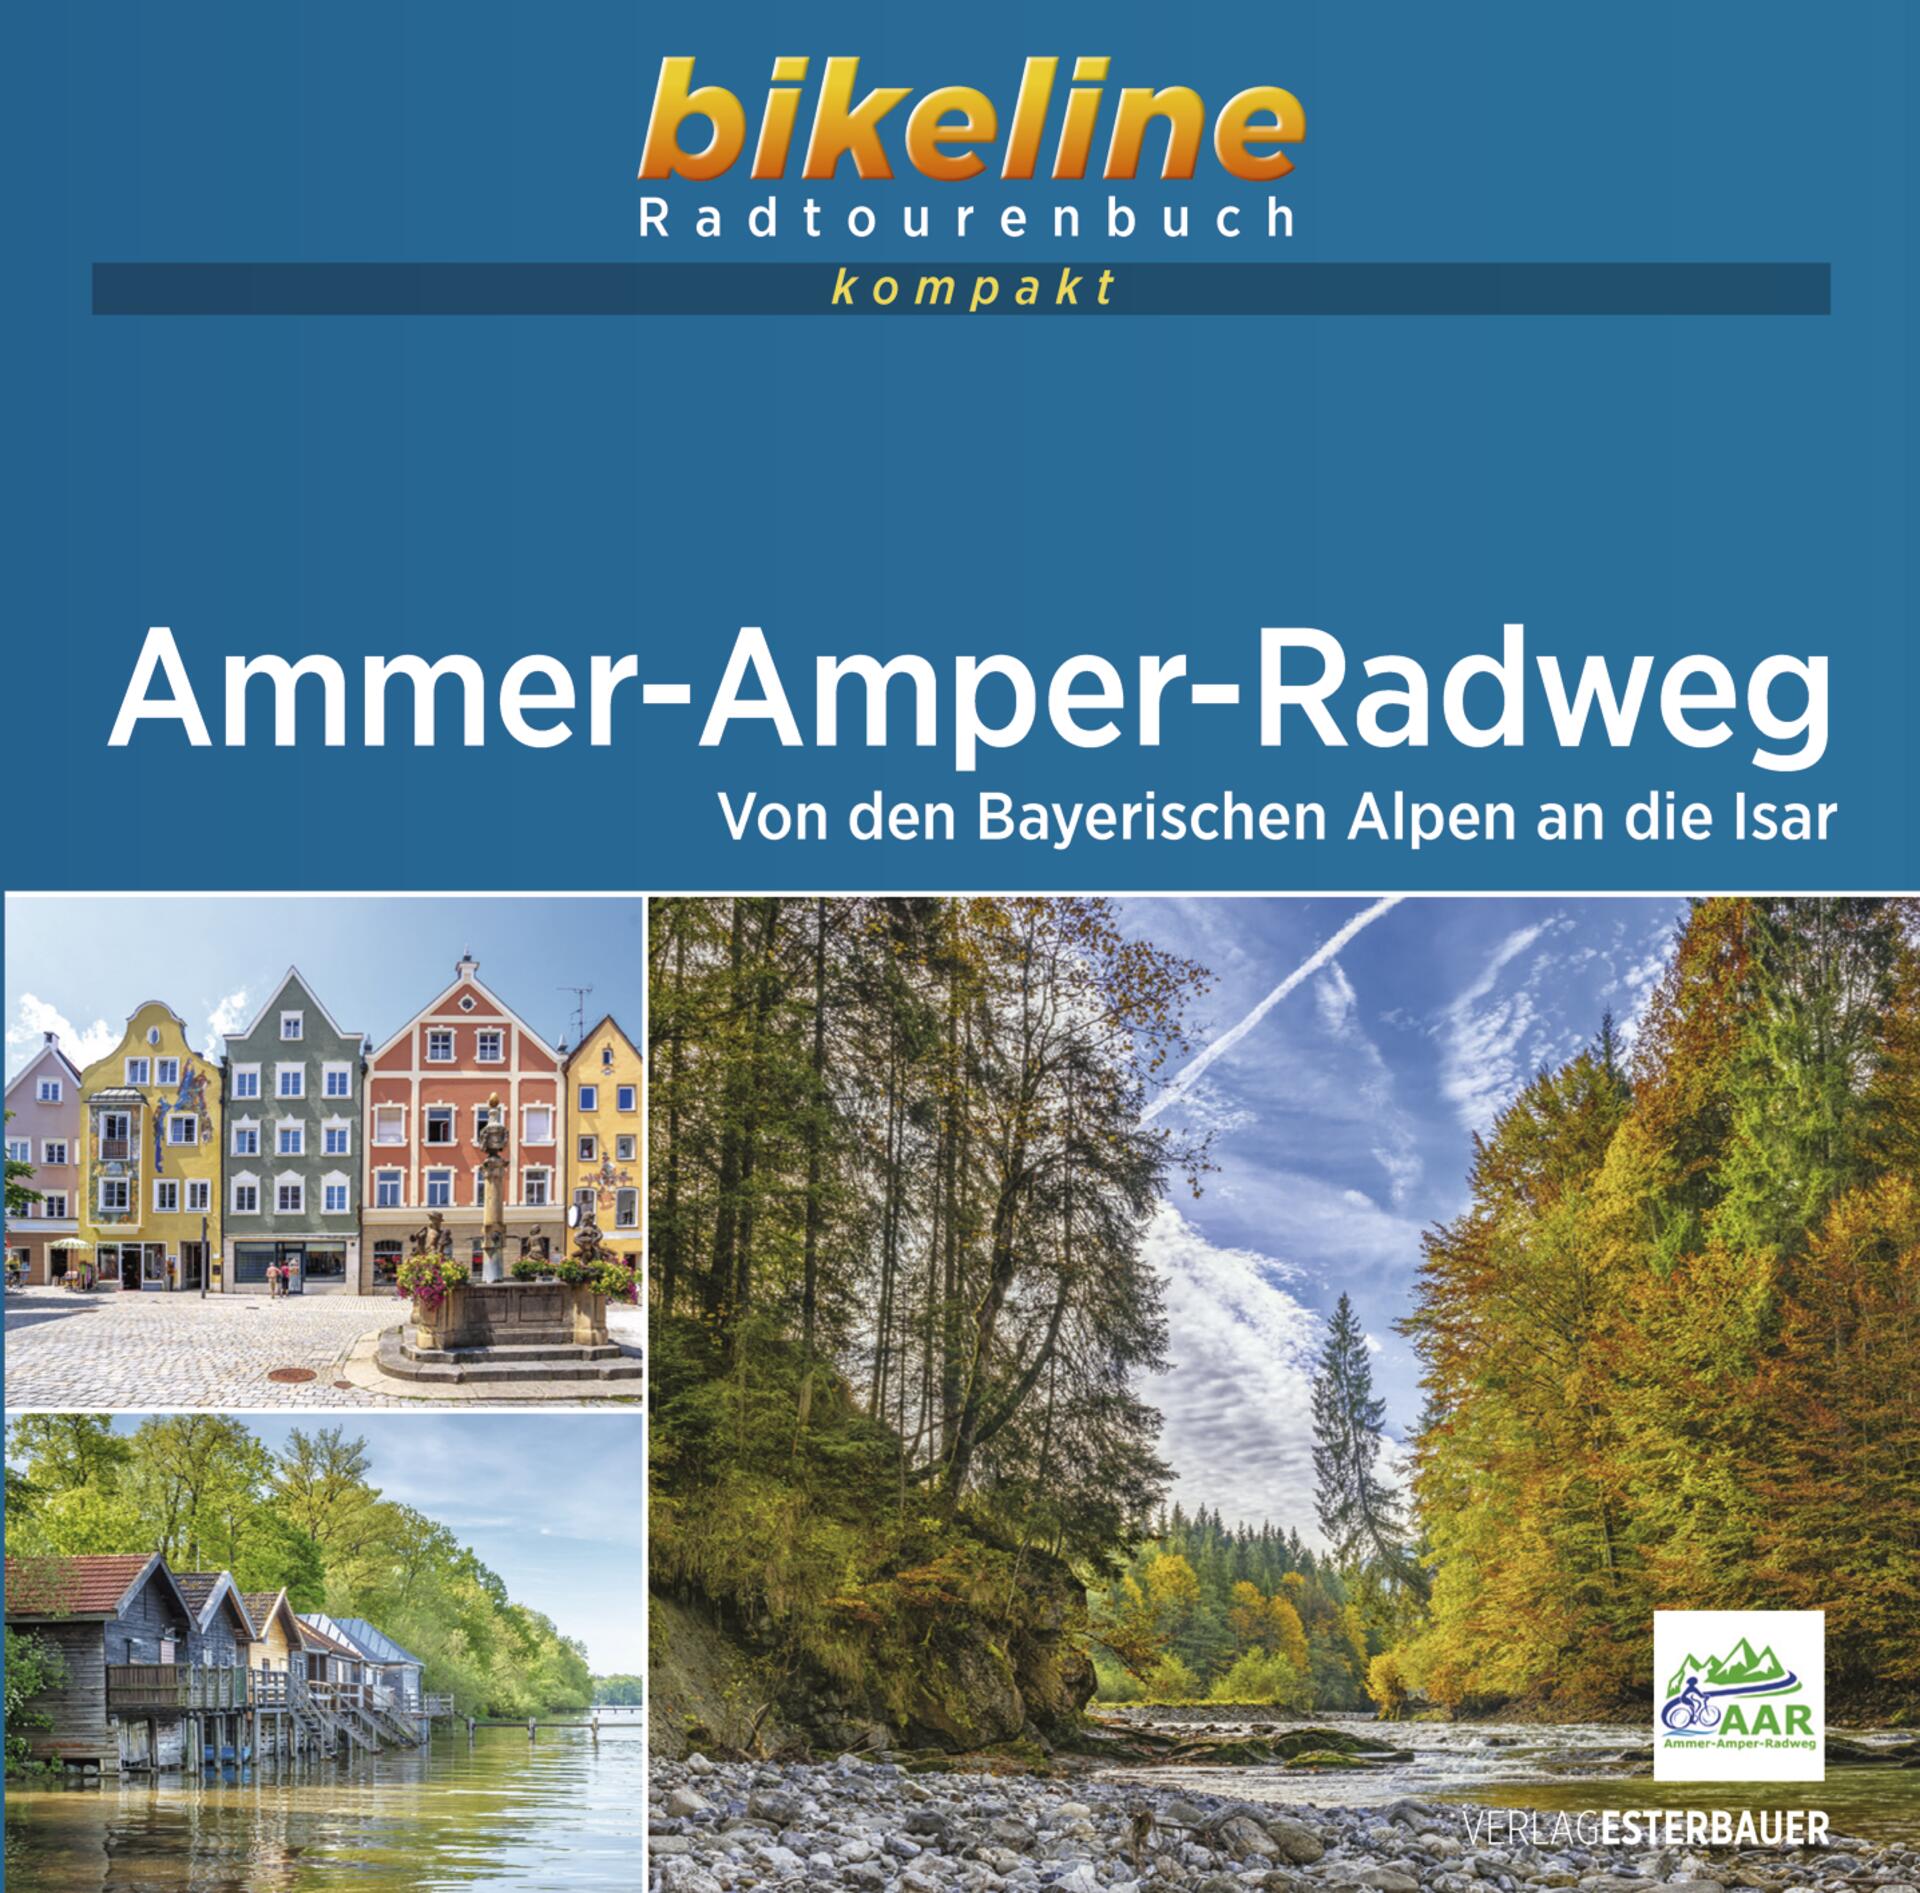 Foto vom Ammer-Amper-Radweg